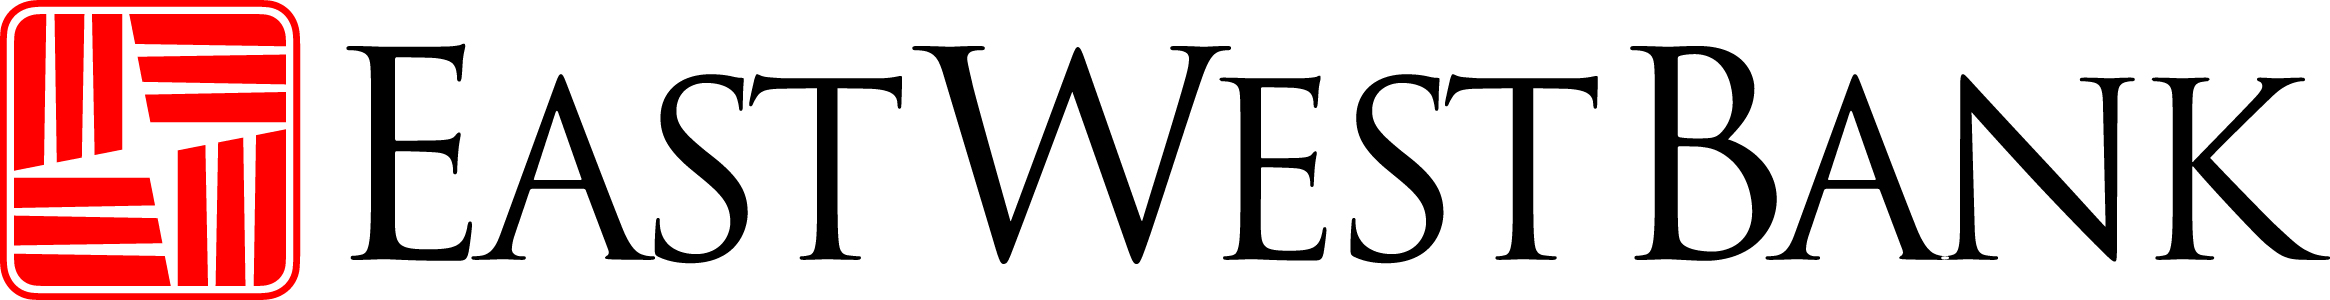 EAST WEST BANK_logo